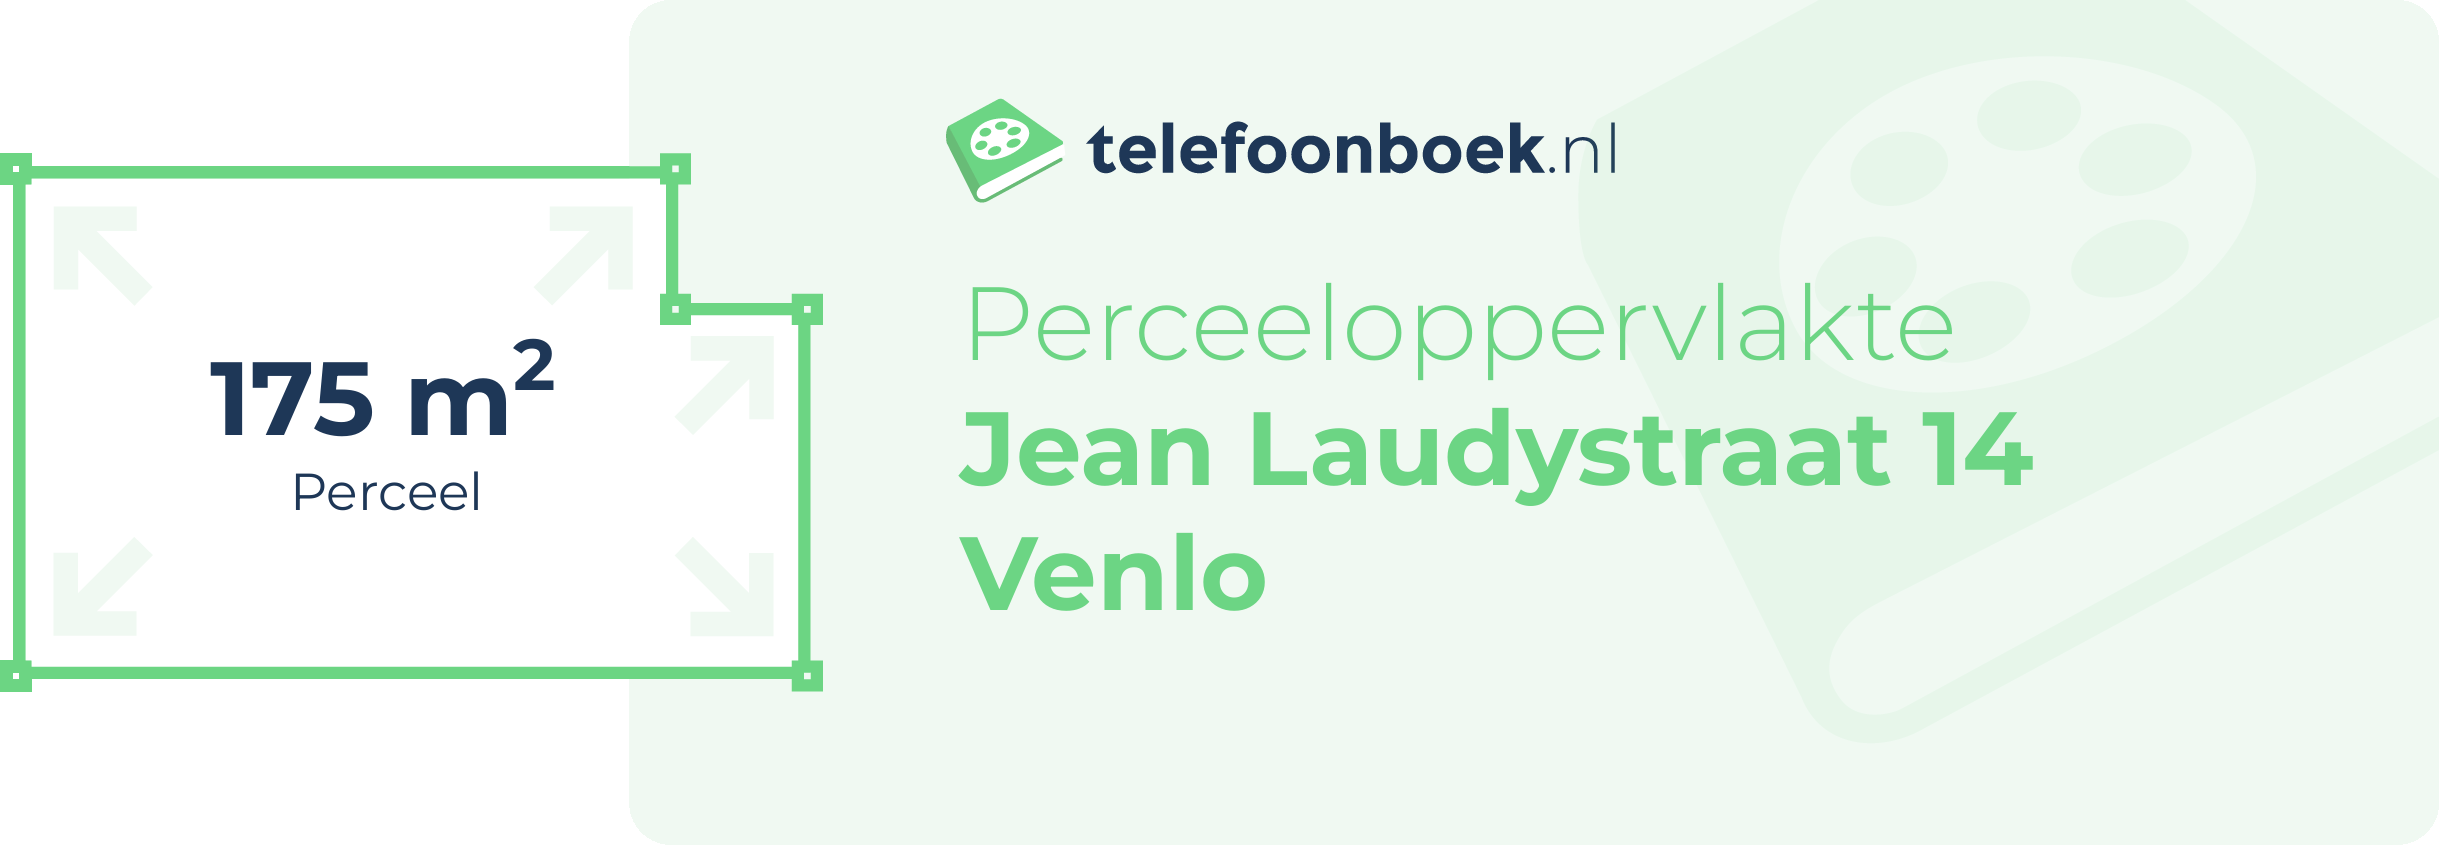 Perceeloppervlakte Jean Laudystraat 14 Venlo